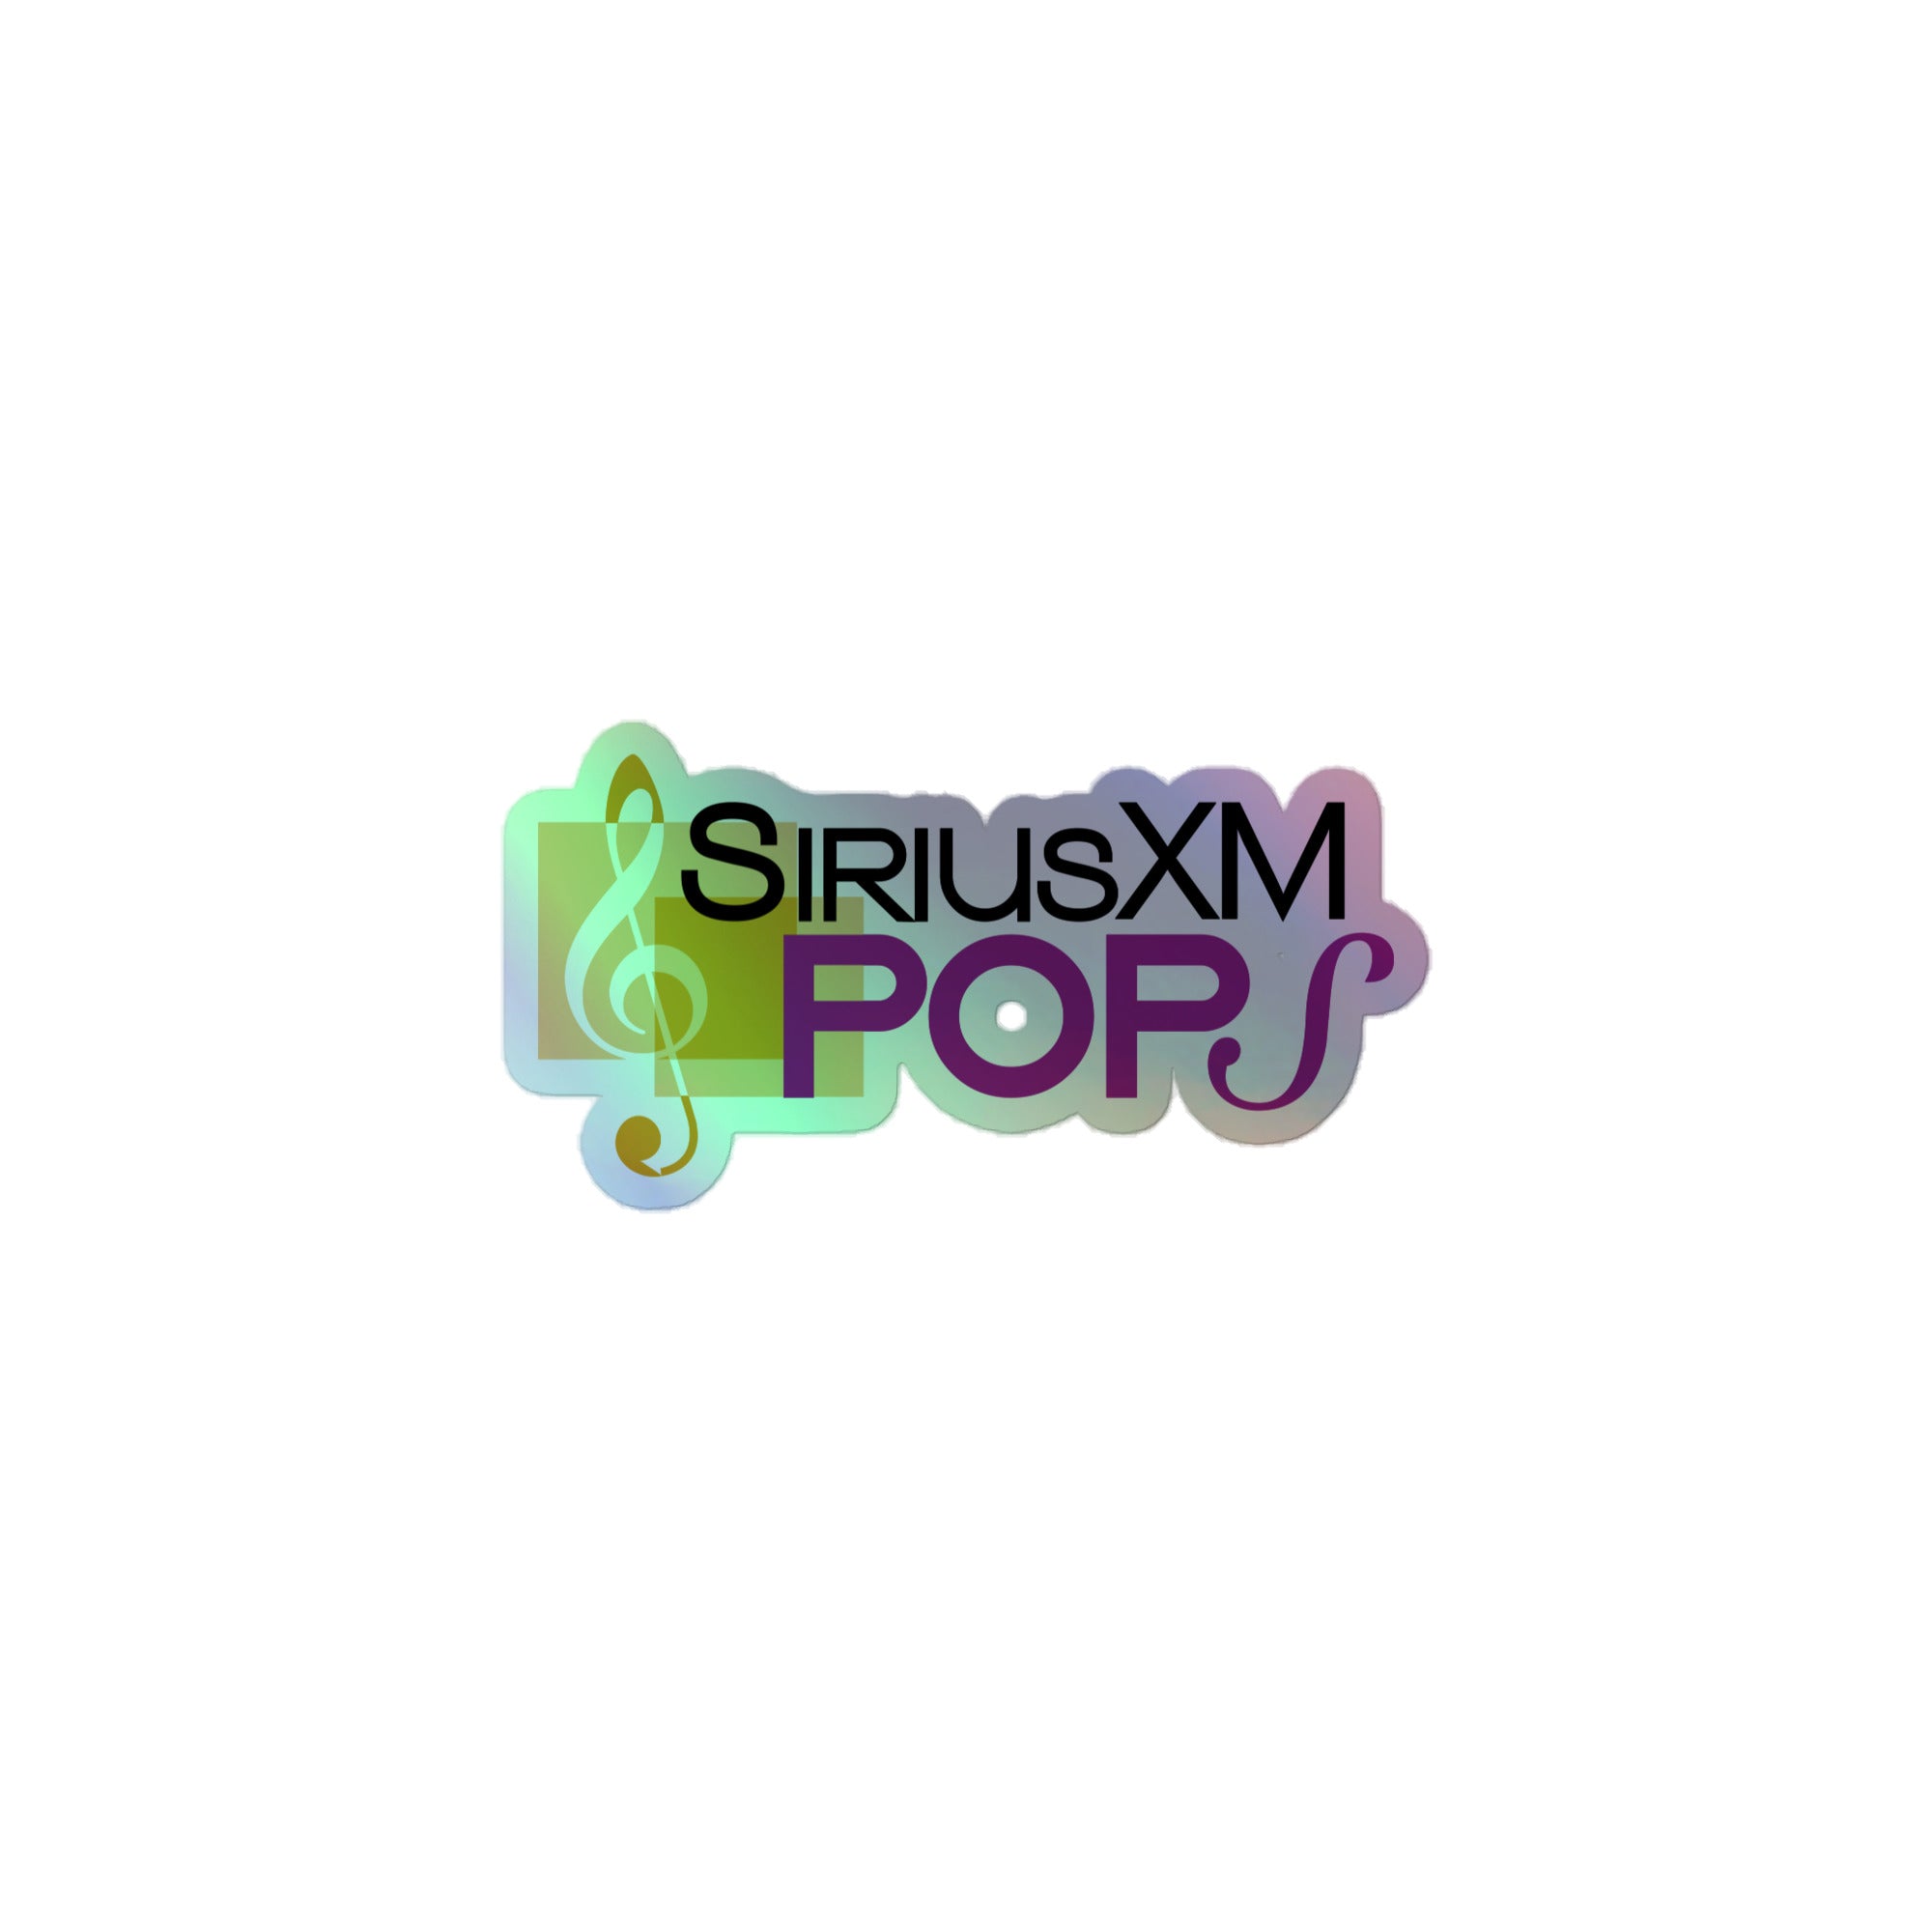 SiriusXM Pops: Holographic Sticker